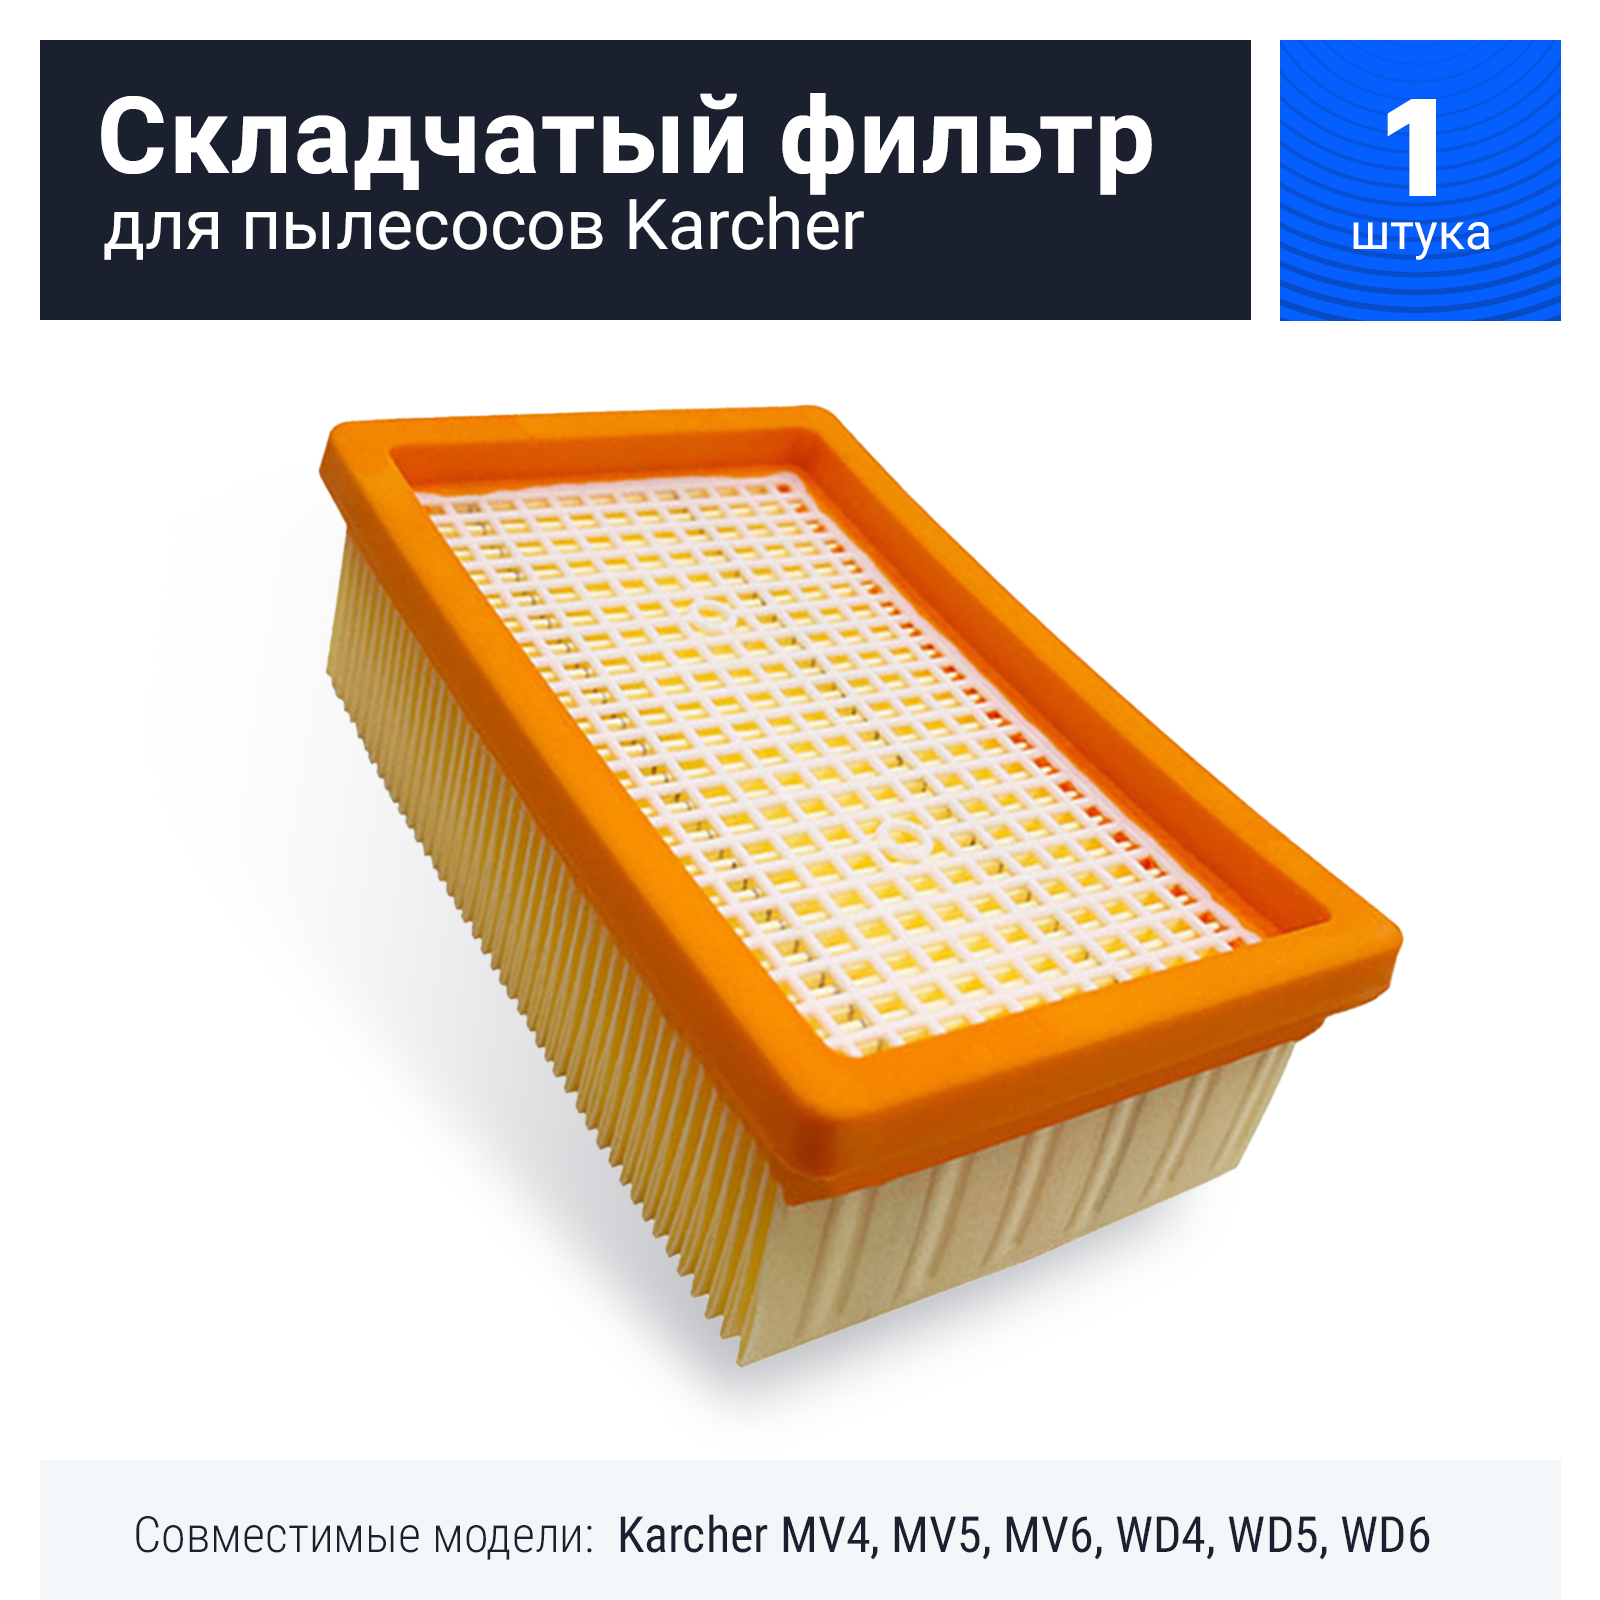 6-pack Filter For Karcher Mv4 Mv5 Mv6 Wd4 Wd5 Wd6 Vacuum Cleaner,  Replacement Parts Liver Filter